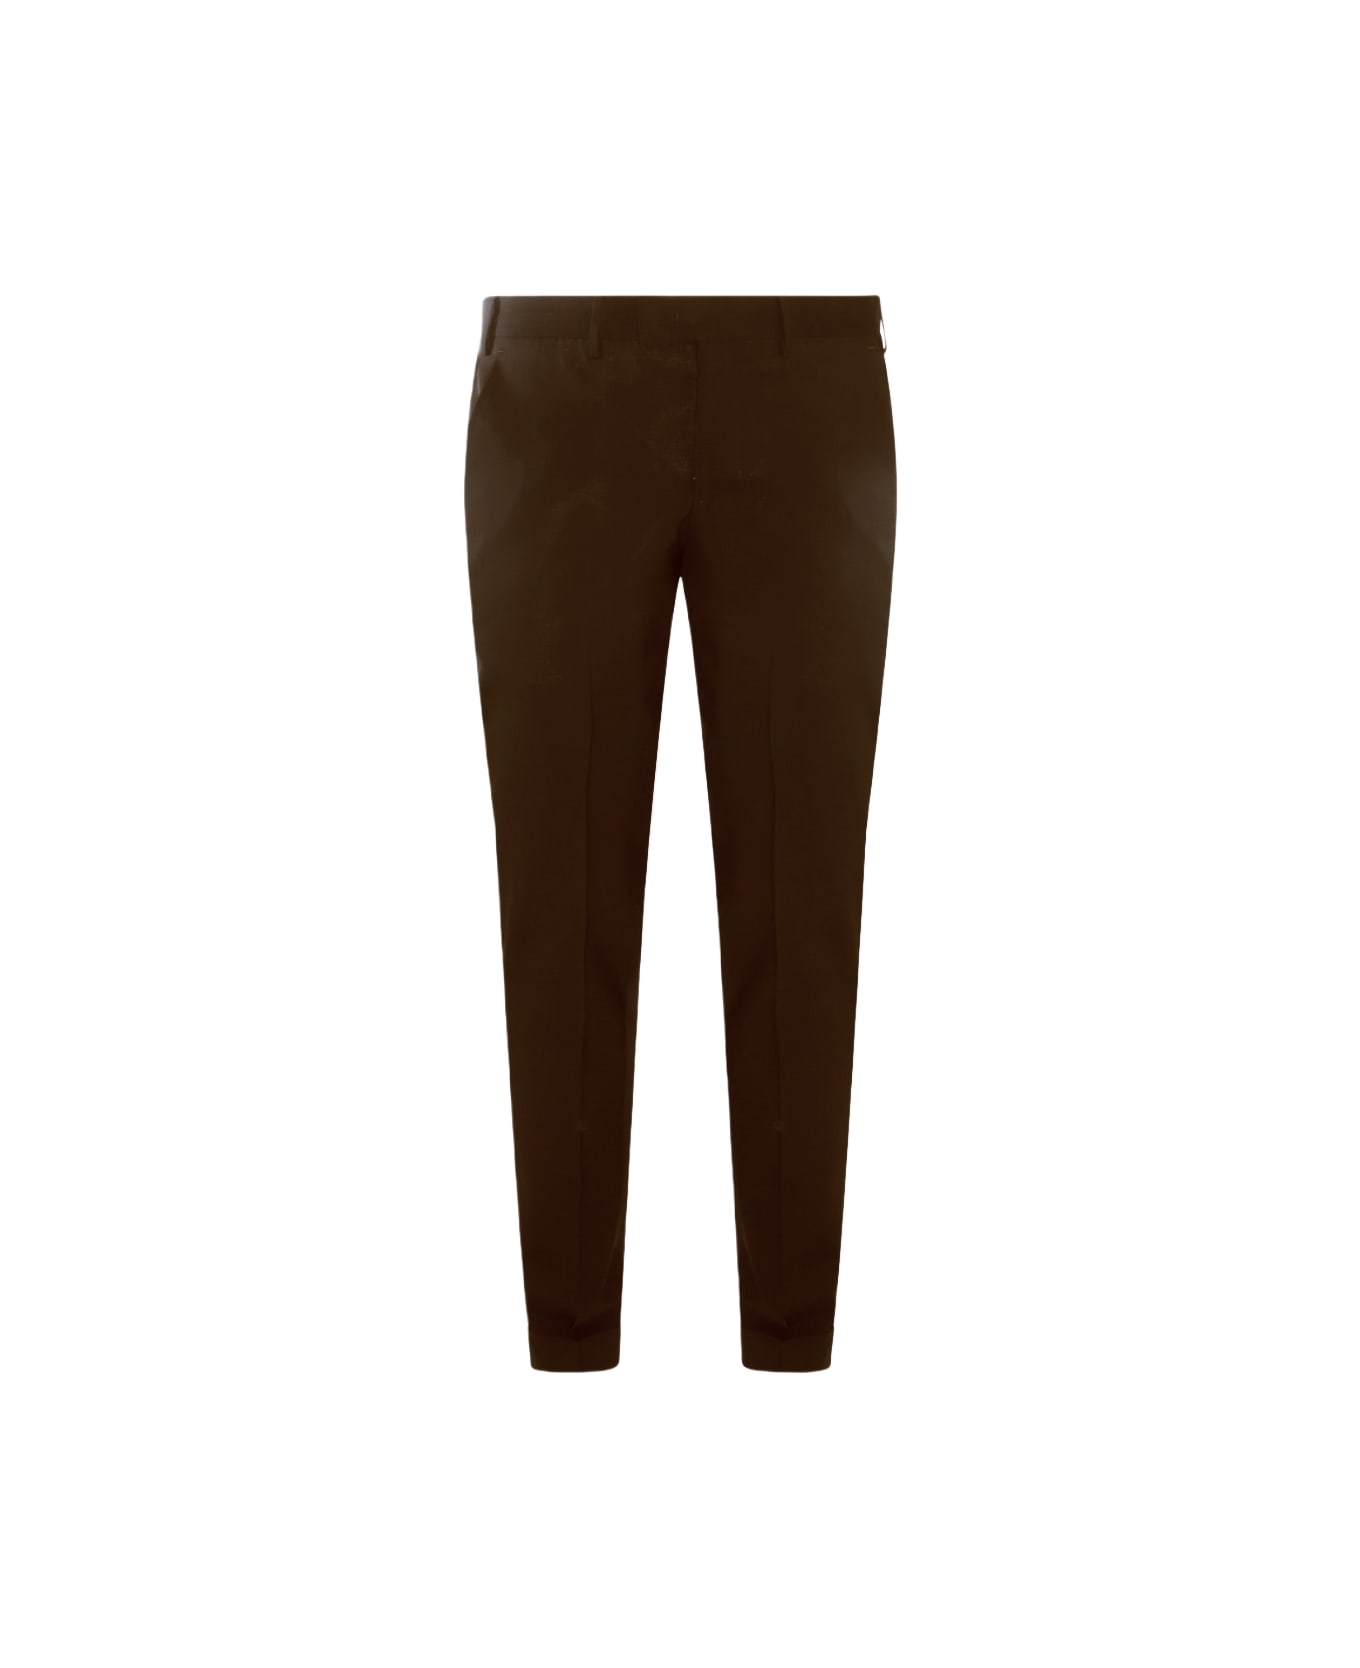 PT Torino Brown Wool Pants - Marrone scuro